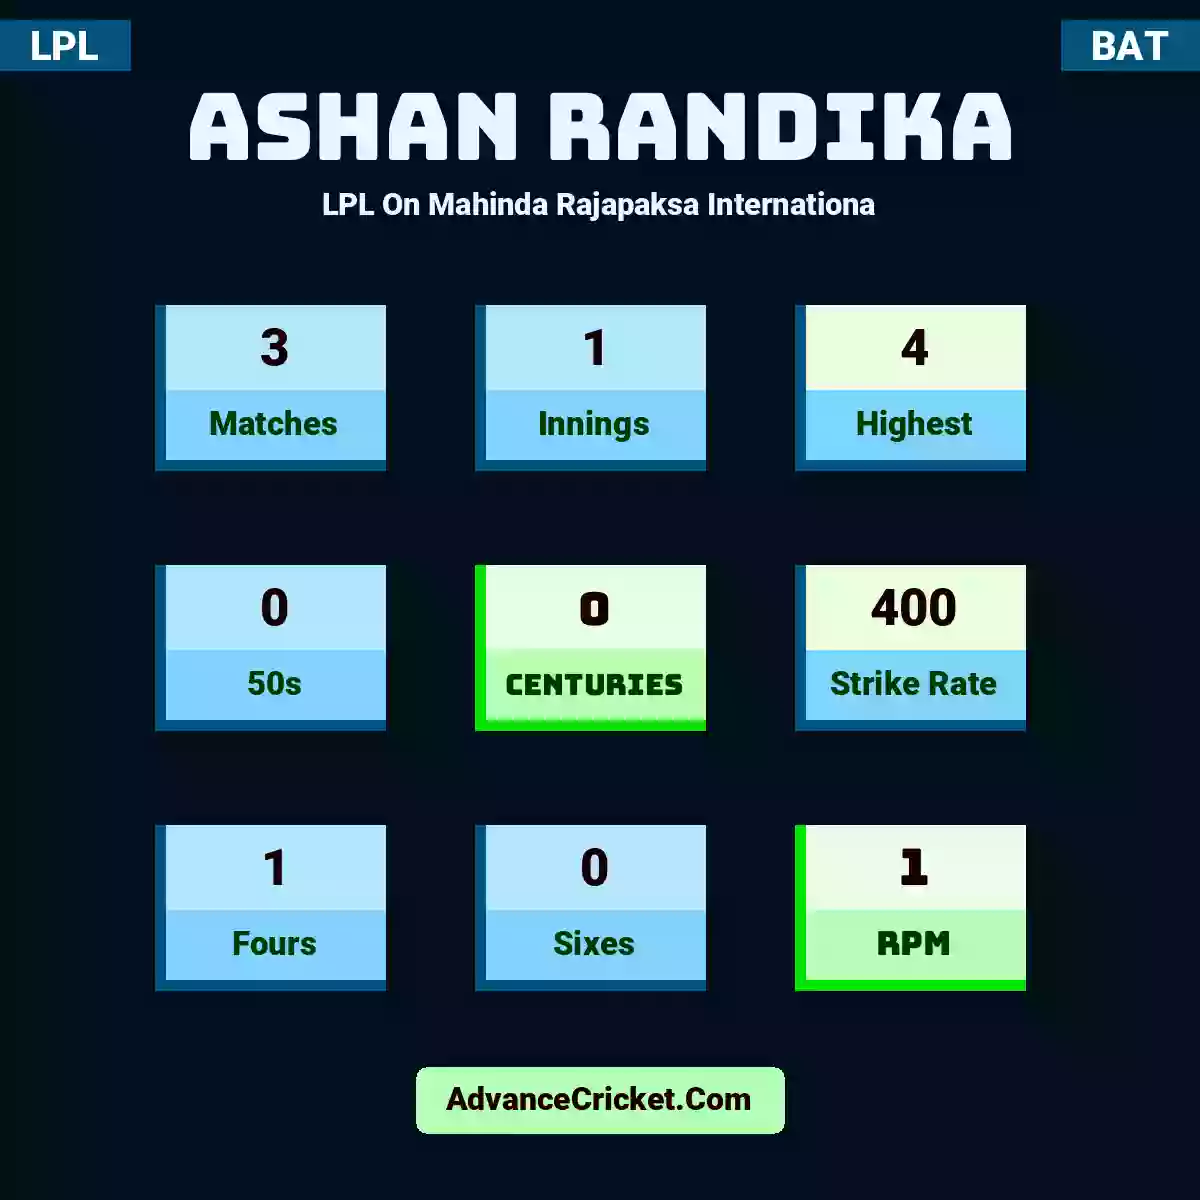 Ashan Randika LPL  On Mahinda Rajapaksa Internationa, Ashan Randika played 3 matches, scored 4 runs as highest, 0 half-centuries, and 0 centuries, with a strike rate of 400. A.Randika hit 1 fours and 0 sixes, with an RPM of 1.